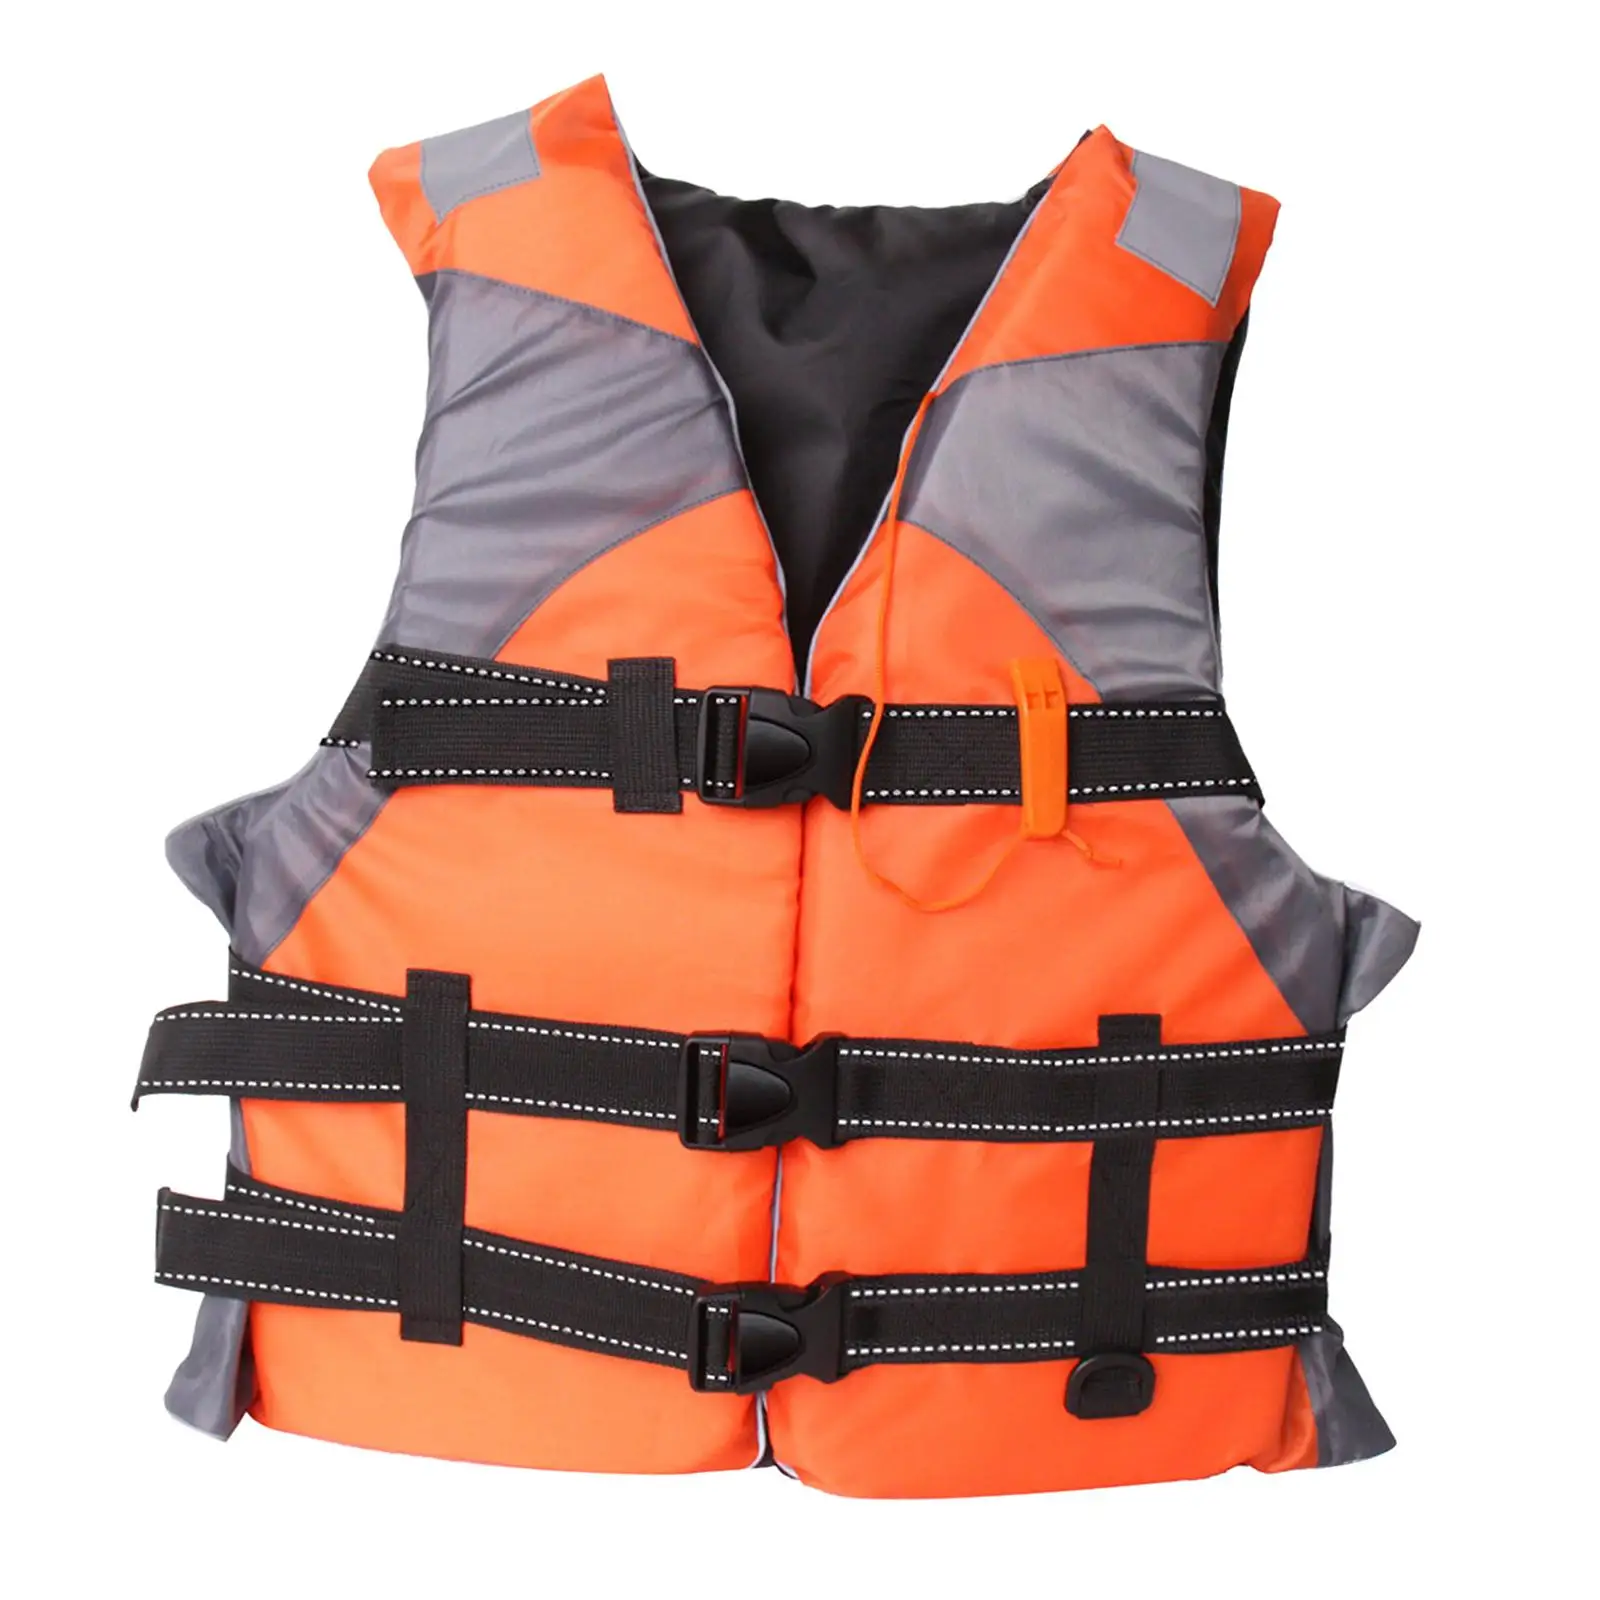 Youth Life Jacket Water Sports Vest Adjustable Strap Floating Vest with Whistle for Surfing Fishing Kayak Ski Child